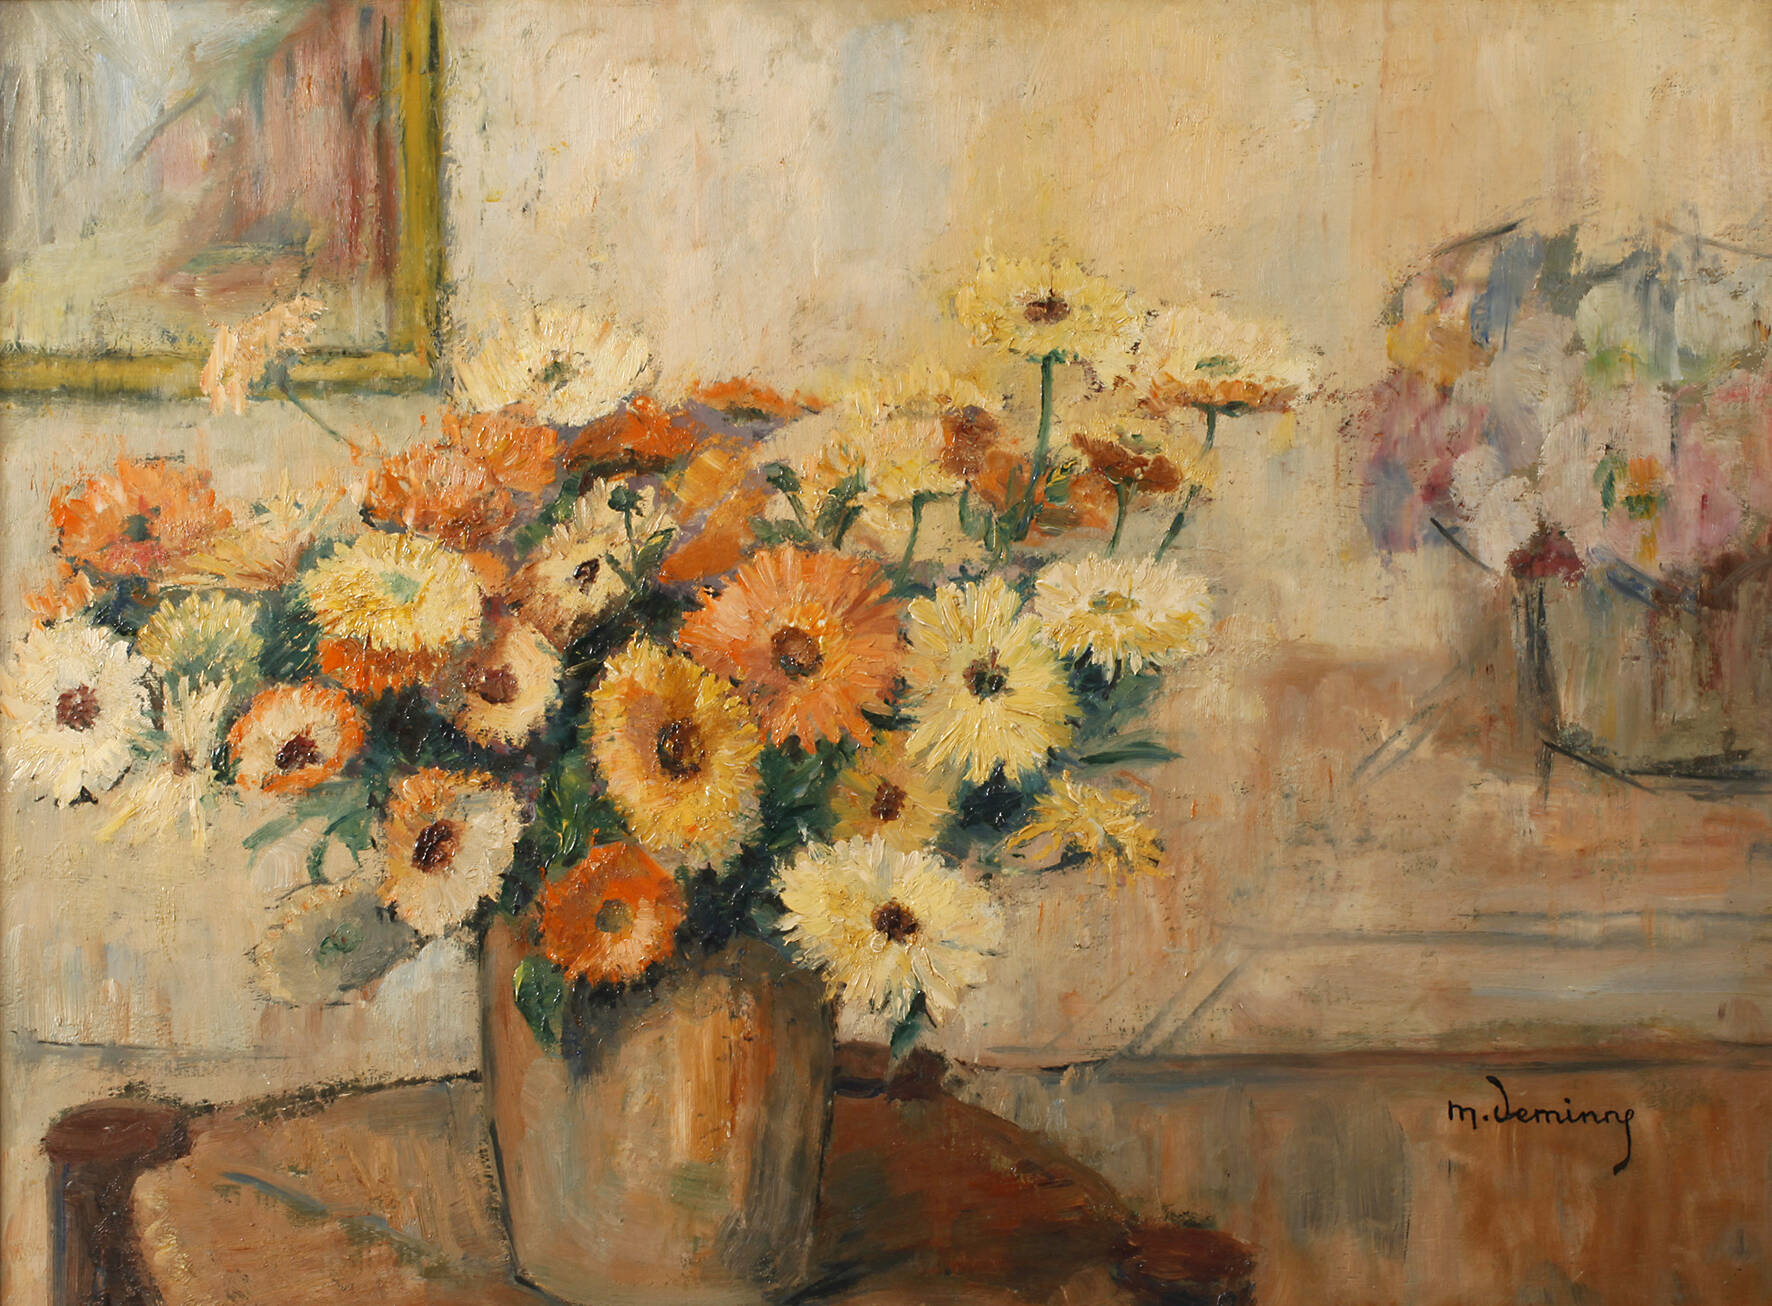 Maurice Deminne, "Fleurs"